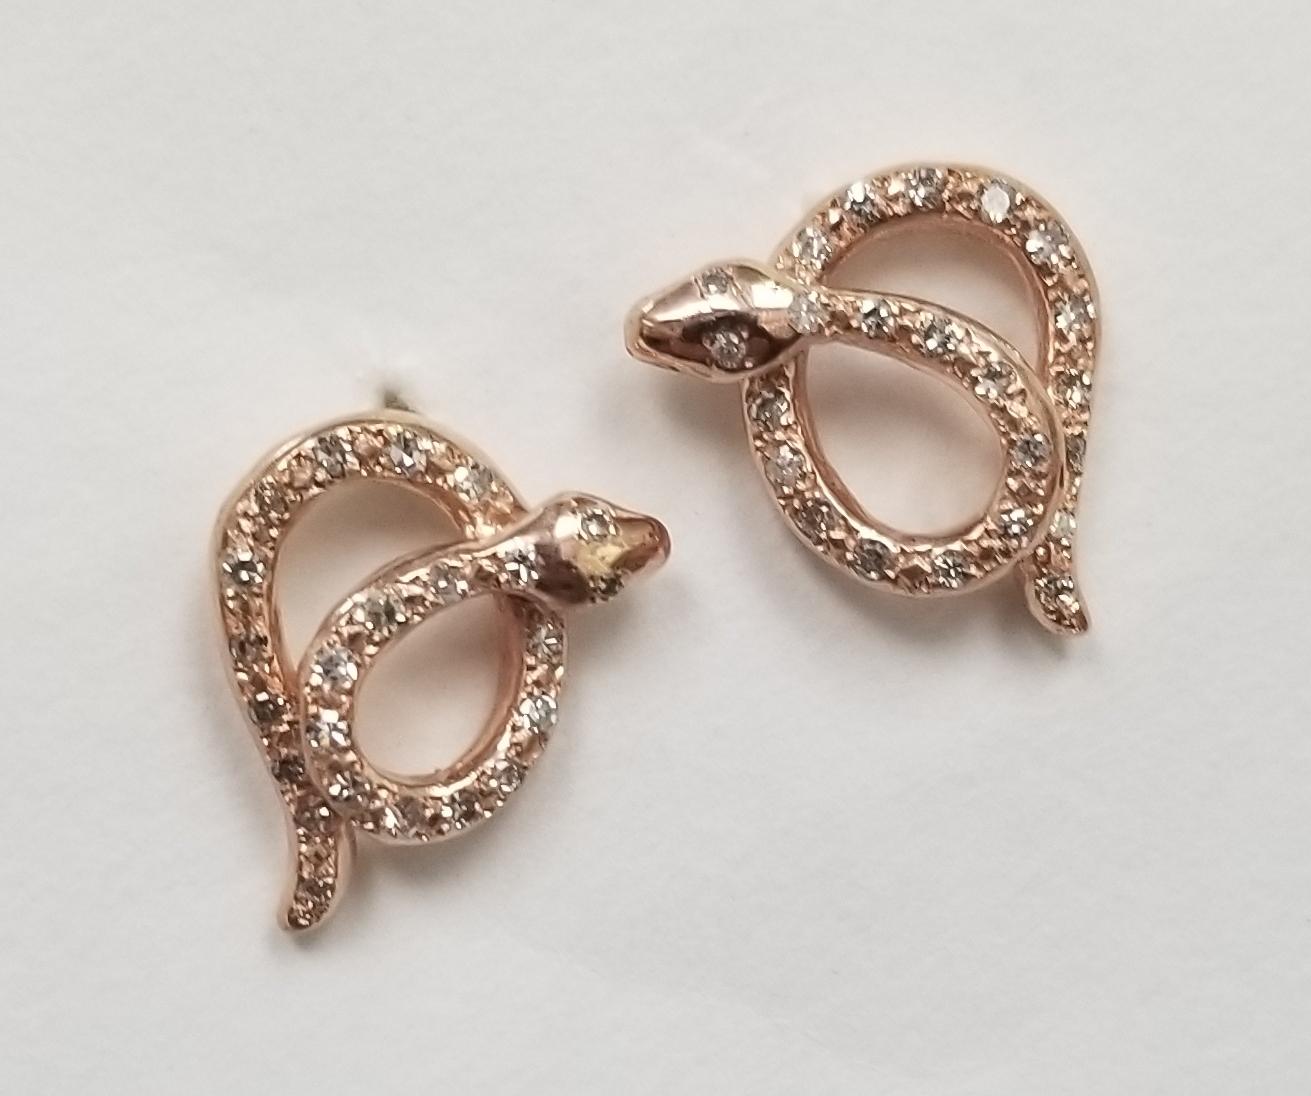 Artisan Beautiful and Amazing Craftsmanship on This 14 Karat Gold Diamond Snake Earrings For Sale